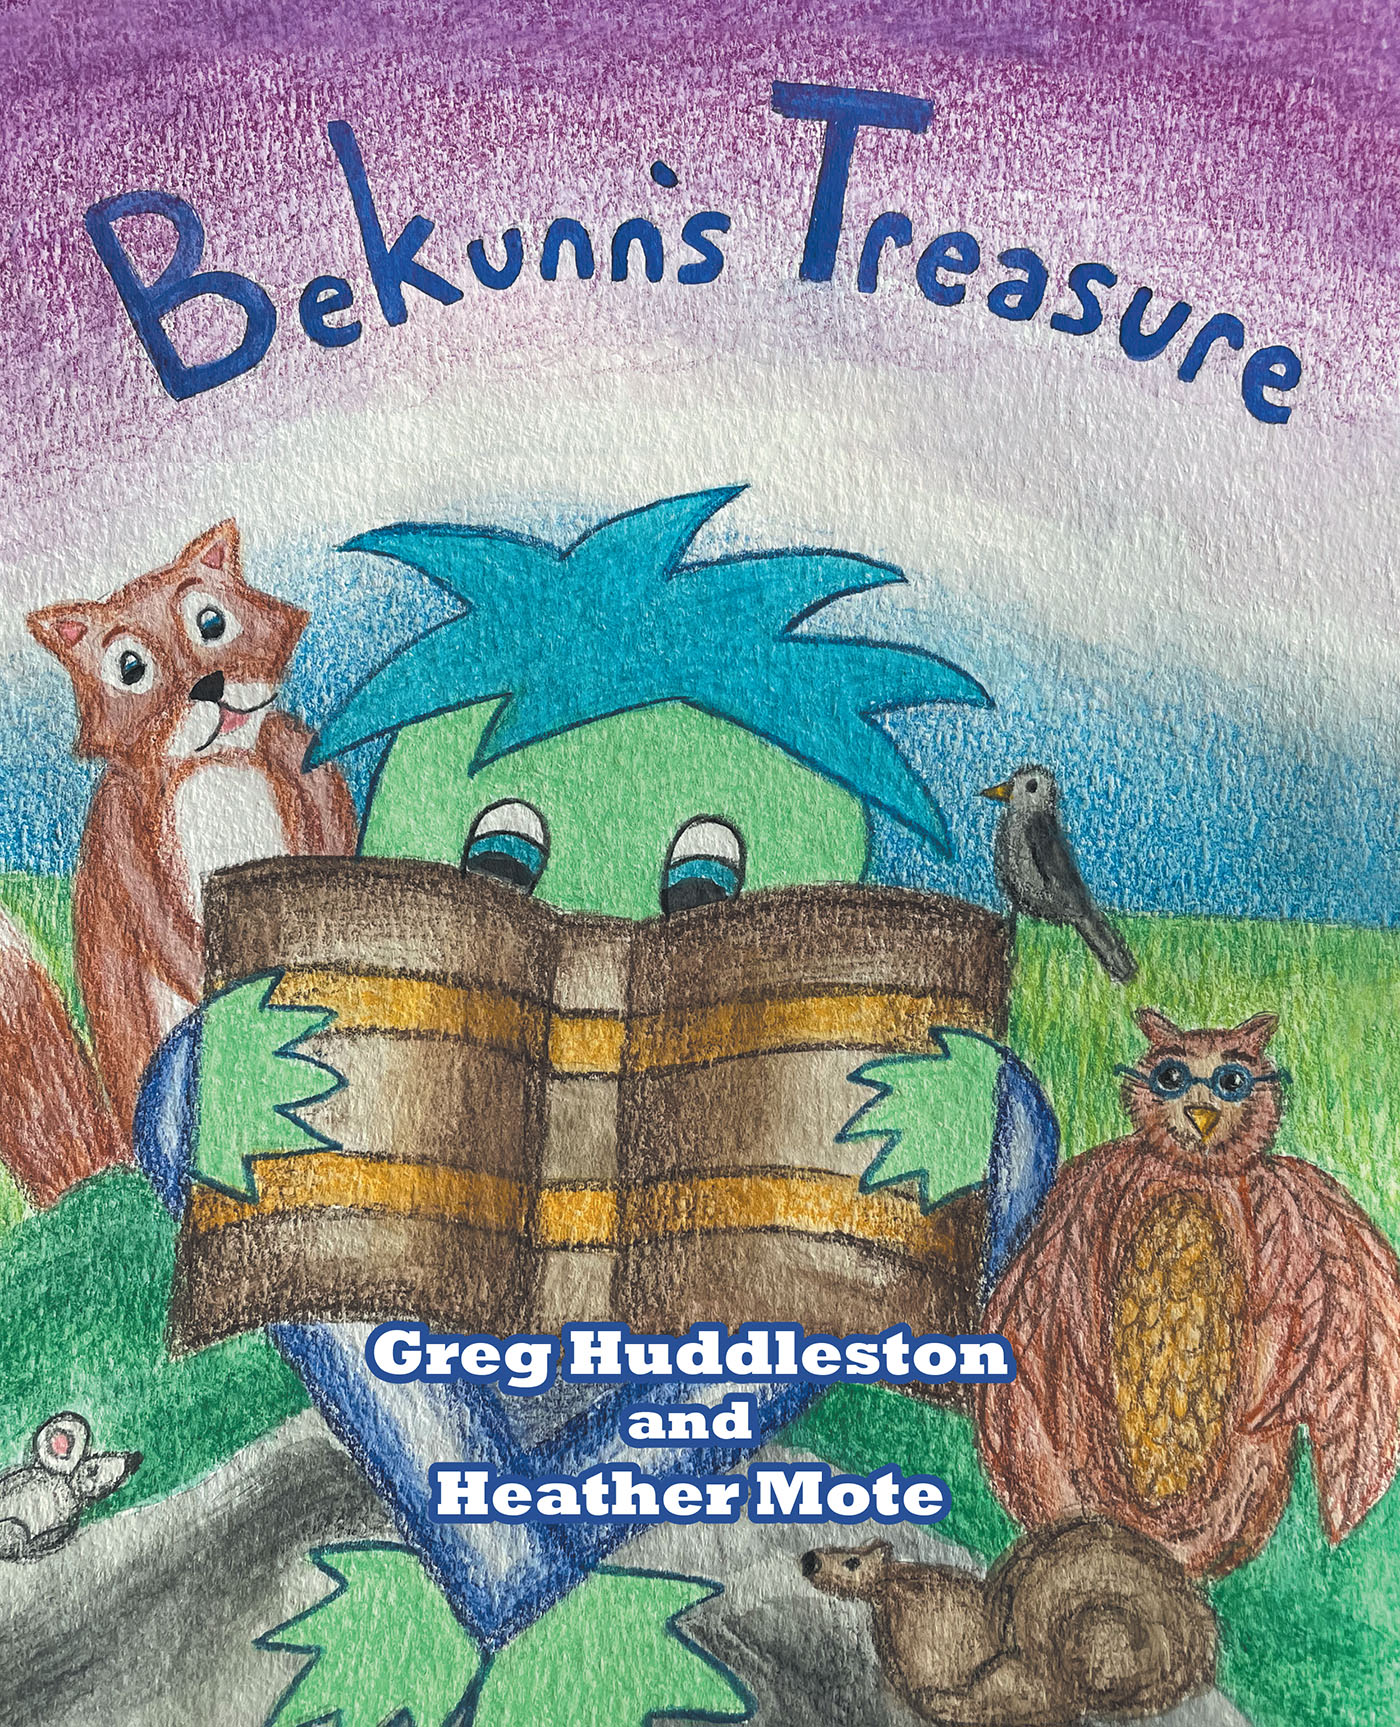 Greg Huddleston’s Newly Released "Bekunn’s Treasure" is a Delightful Narrative That Celebrates the Joys of Reading